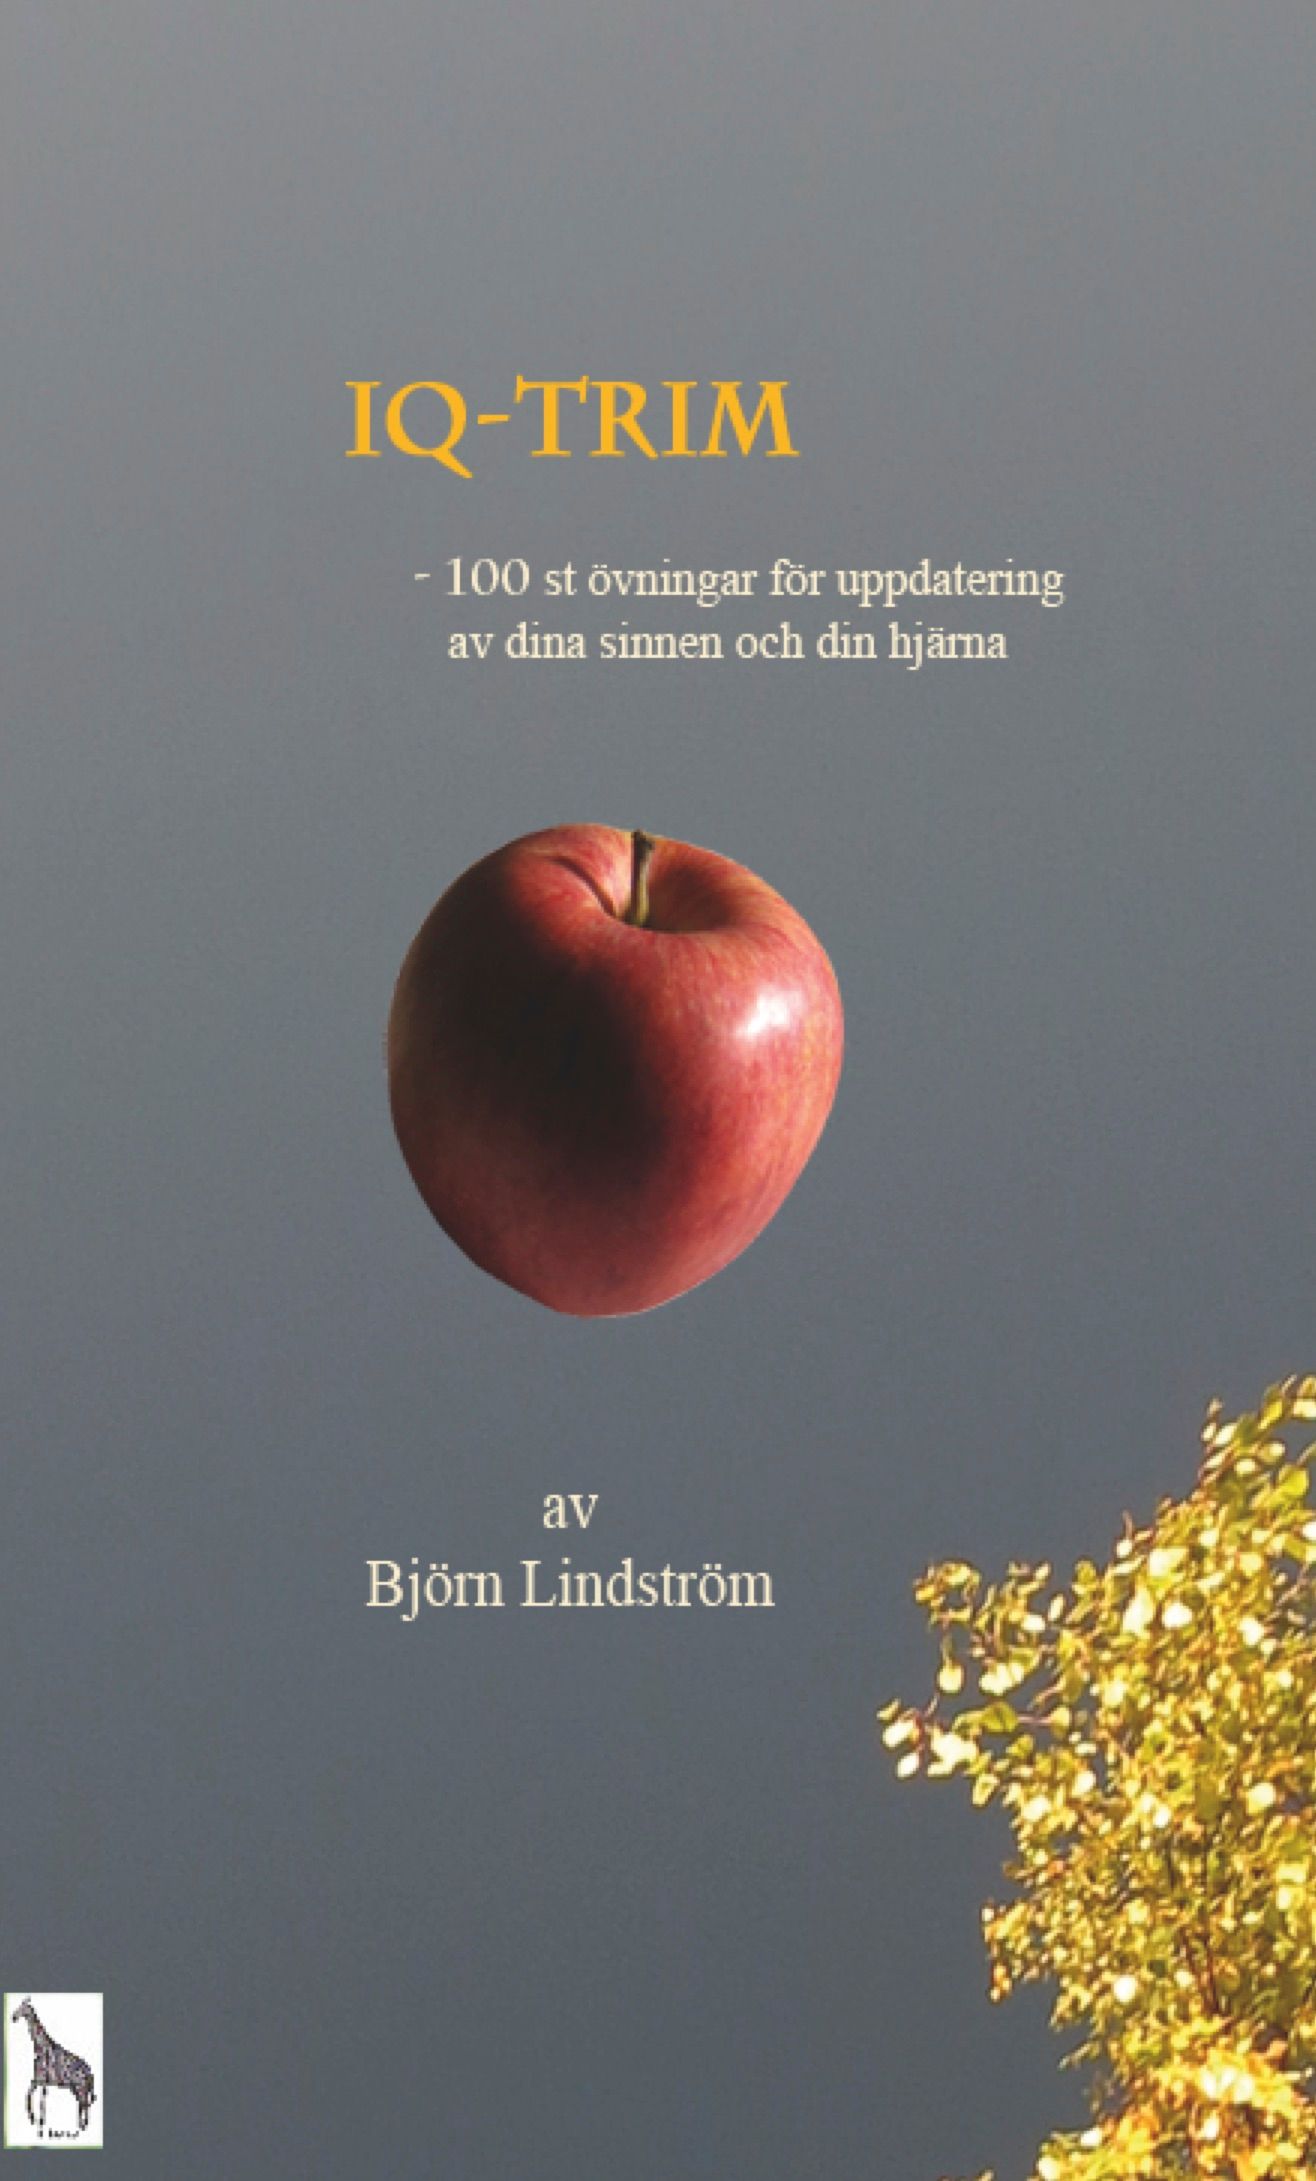 IQ-Trim, eBook by Björn Lindström